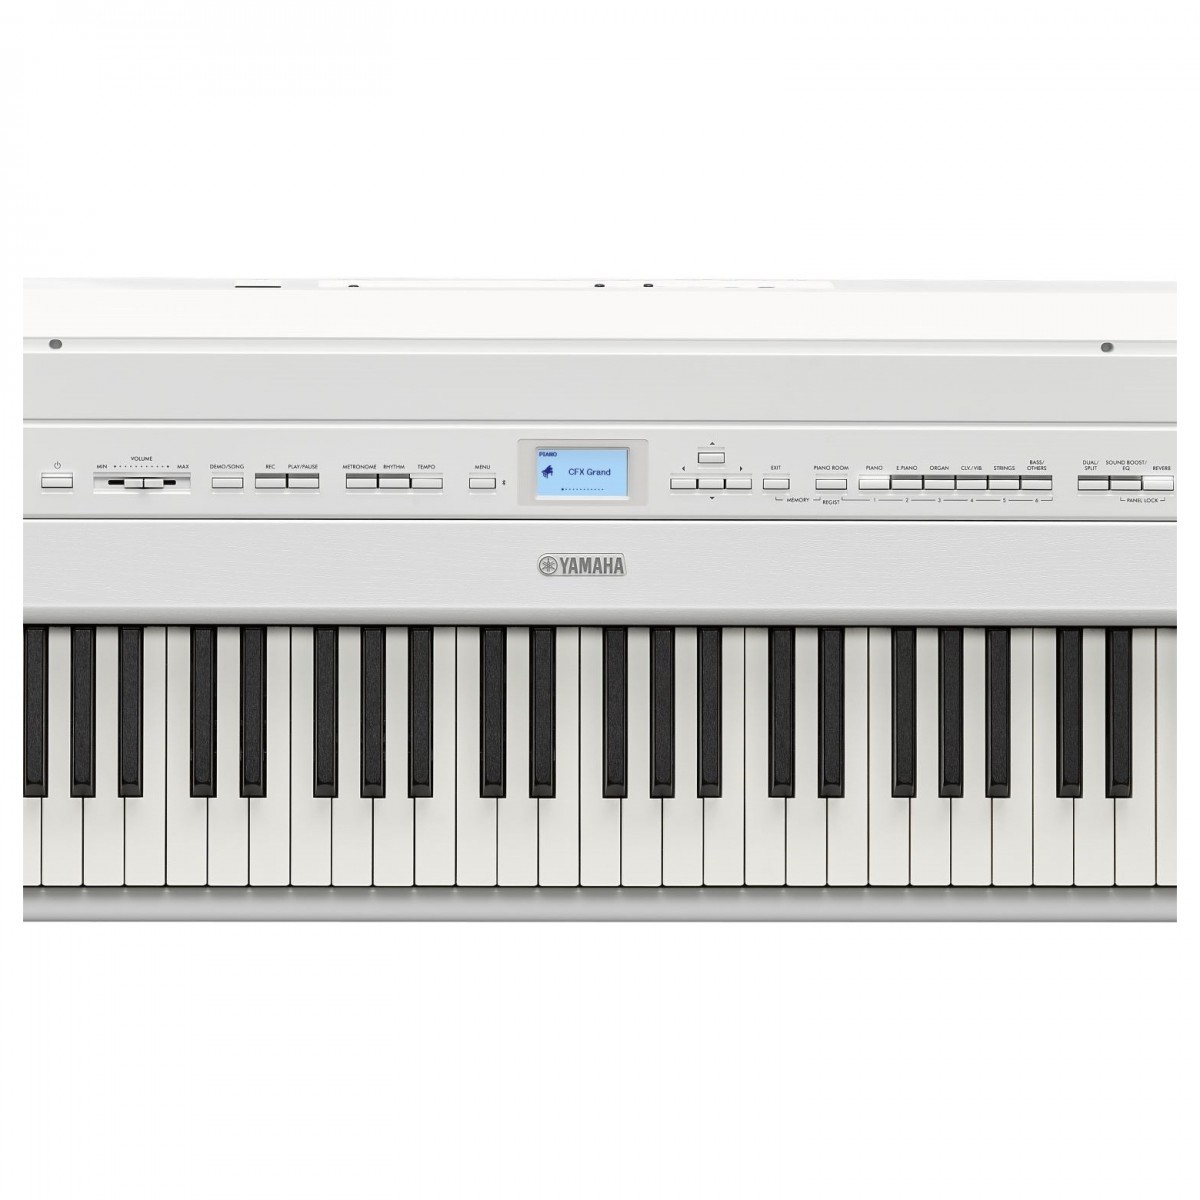 Yamaha P-525w - Portable digital piano - Variation 3